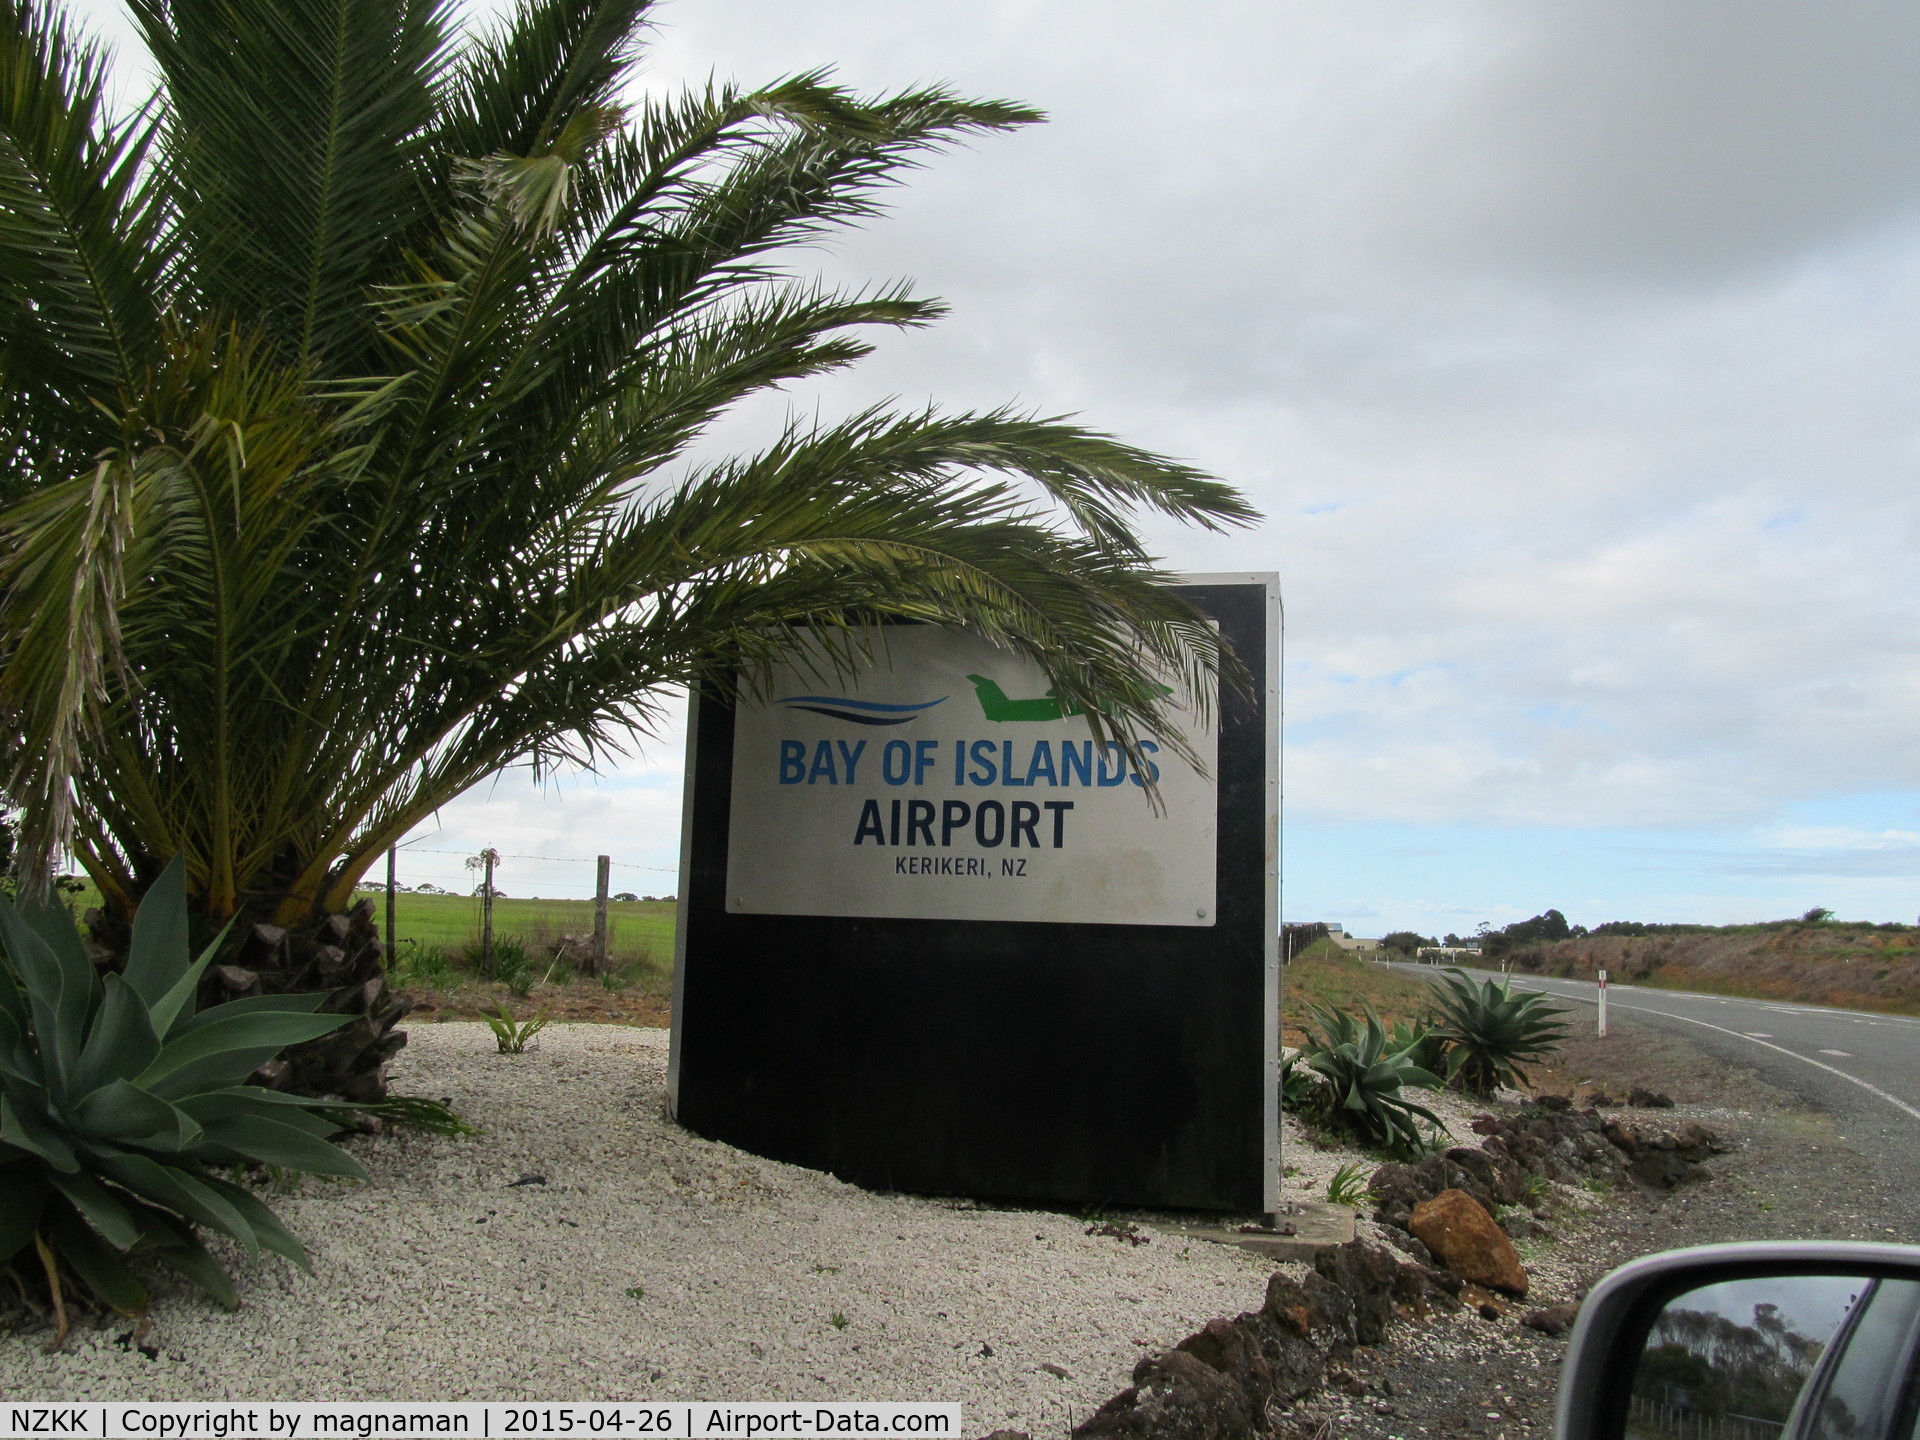 Kerikeri/Bay of Islands Airport, Kerikeri / Bay of Islands New Zealand (NZKK) - Entrance to KeriKeri airport.